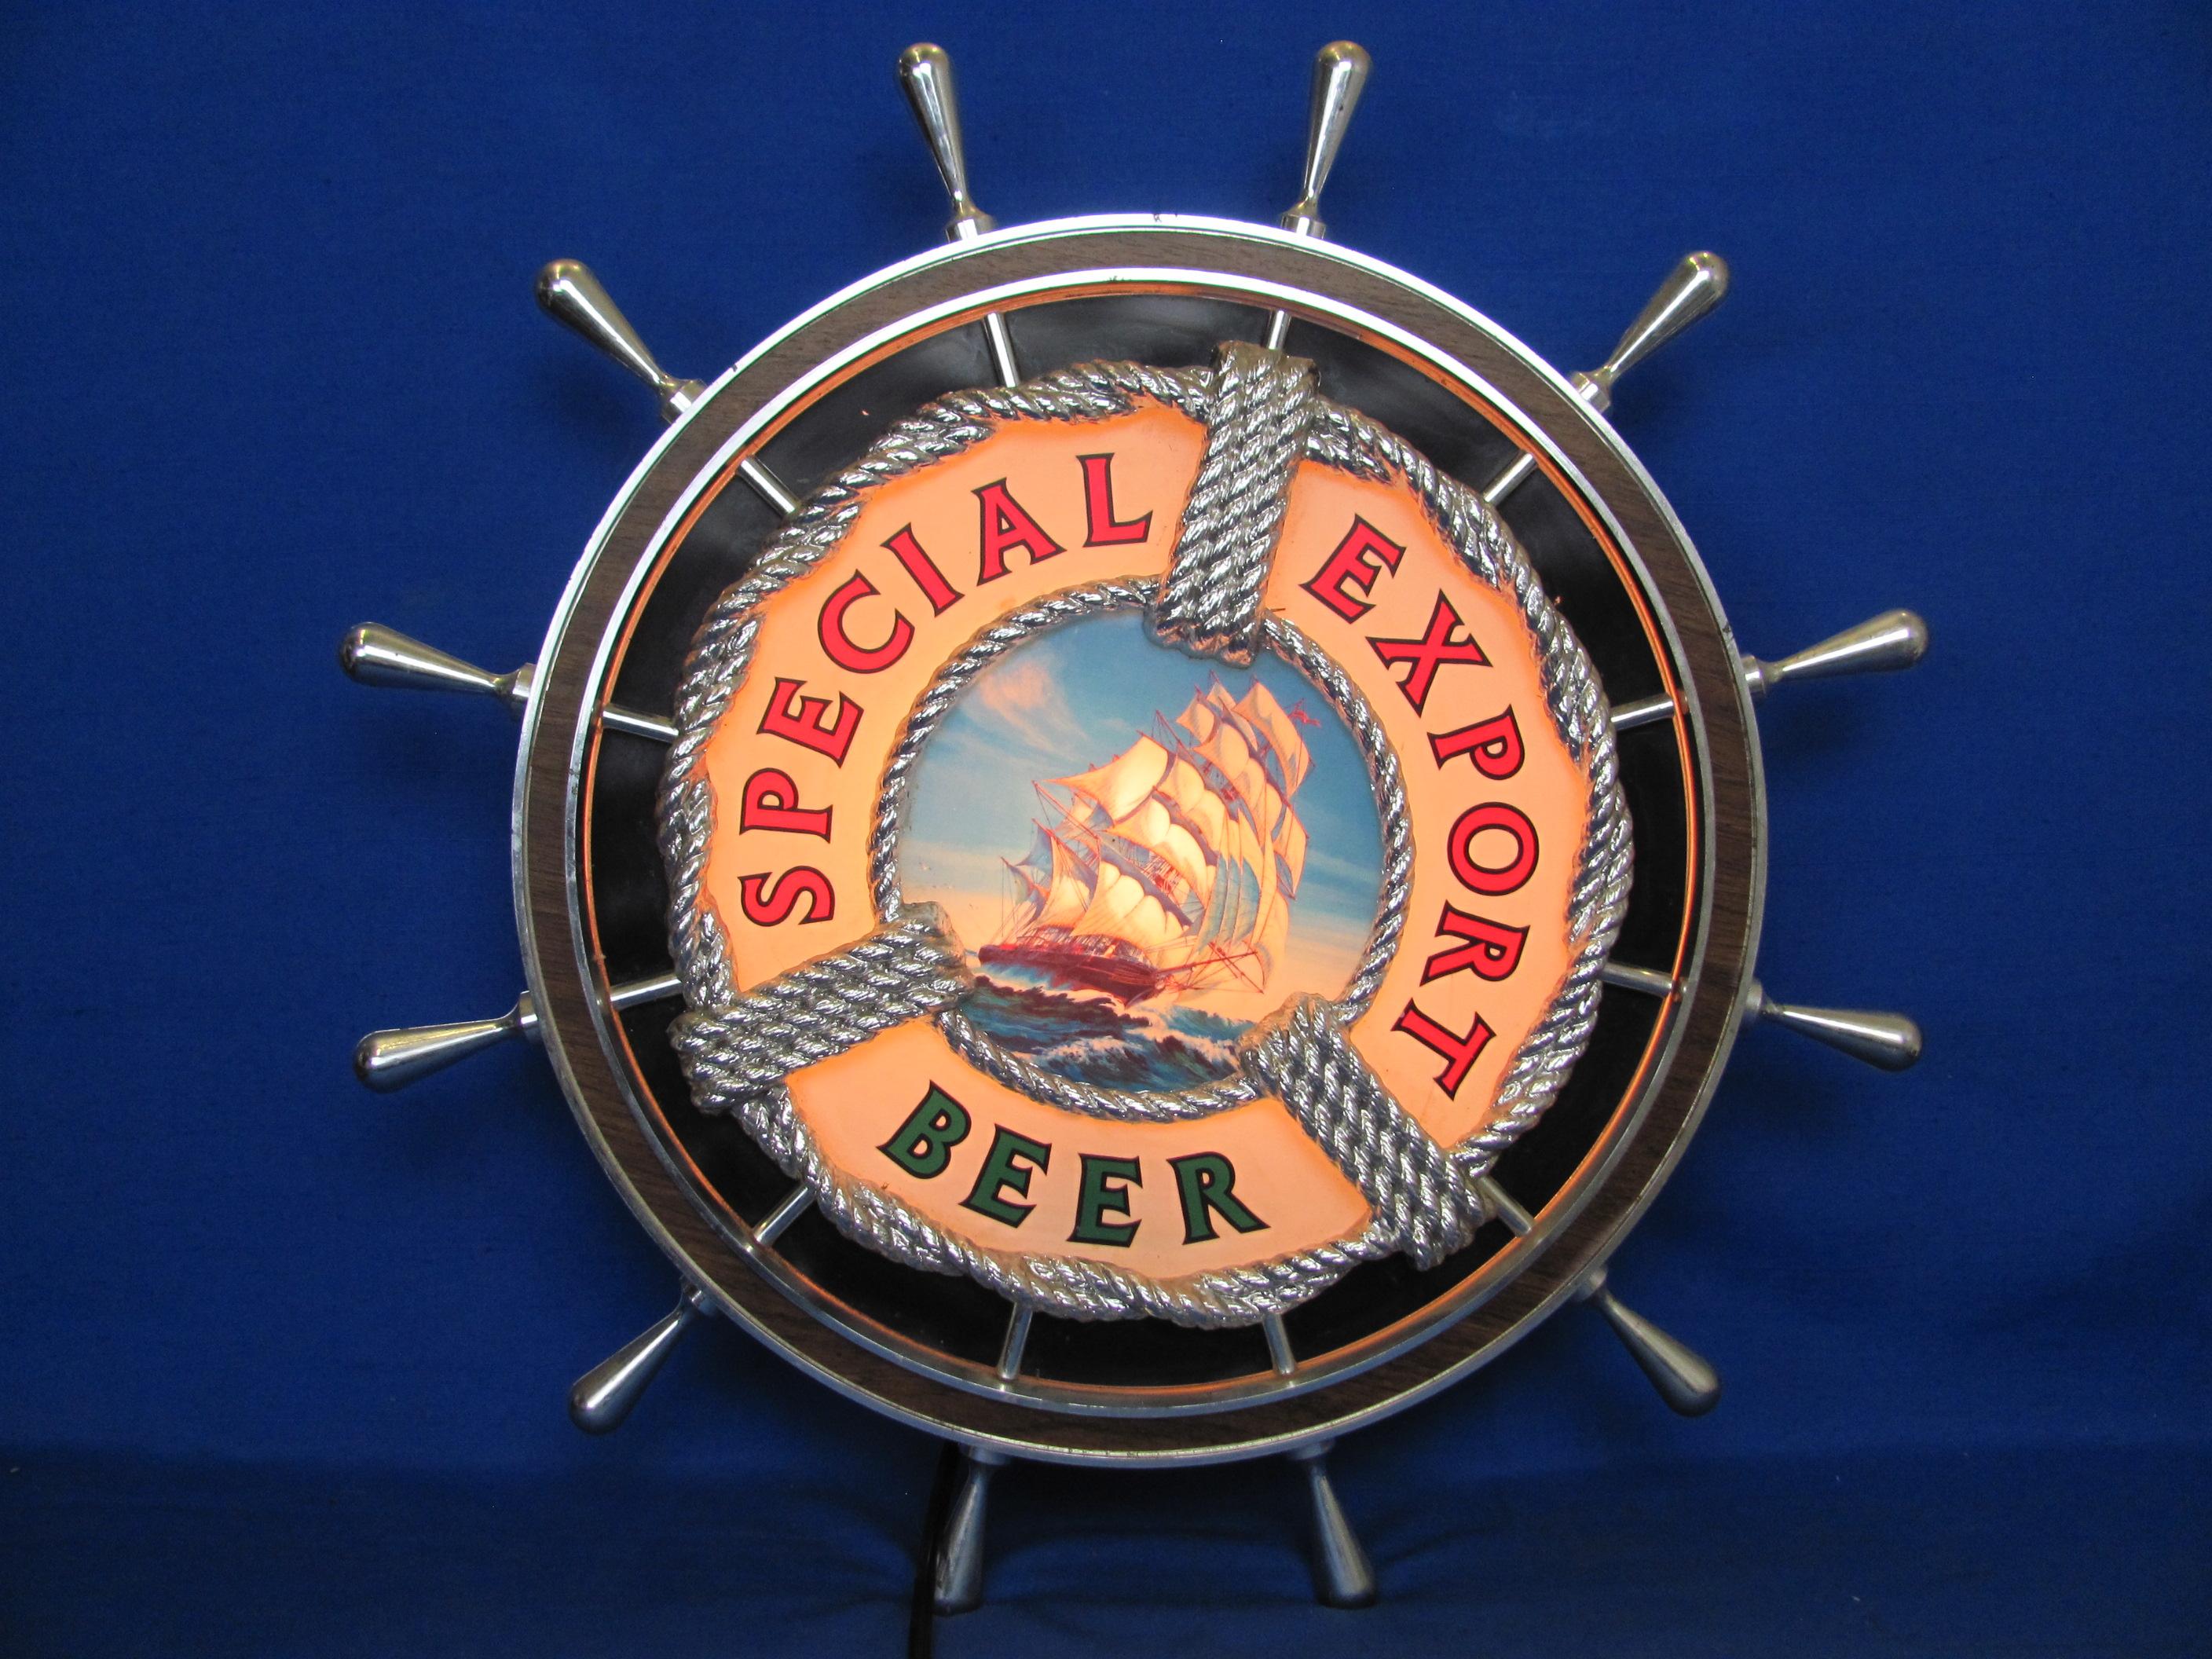 Special Export Beer – Lighted Ship's Wheel Sign – Works – 1987 – 20” in diameter